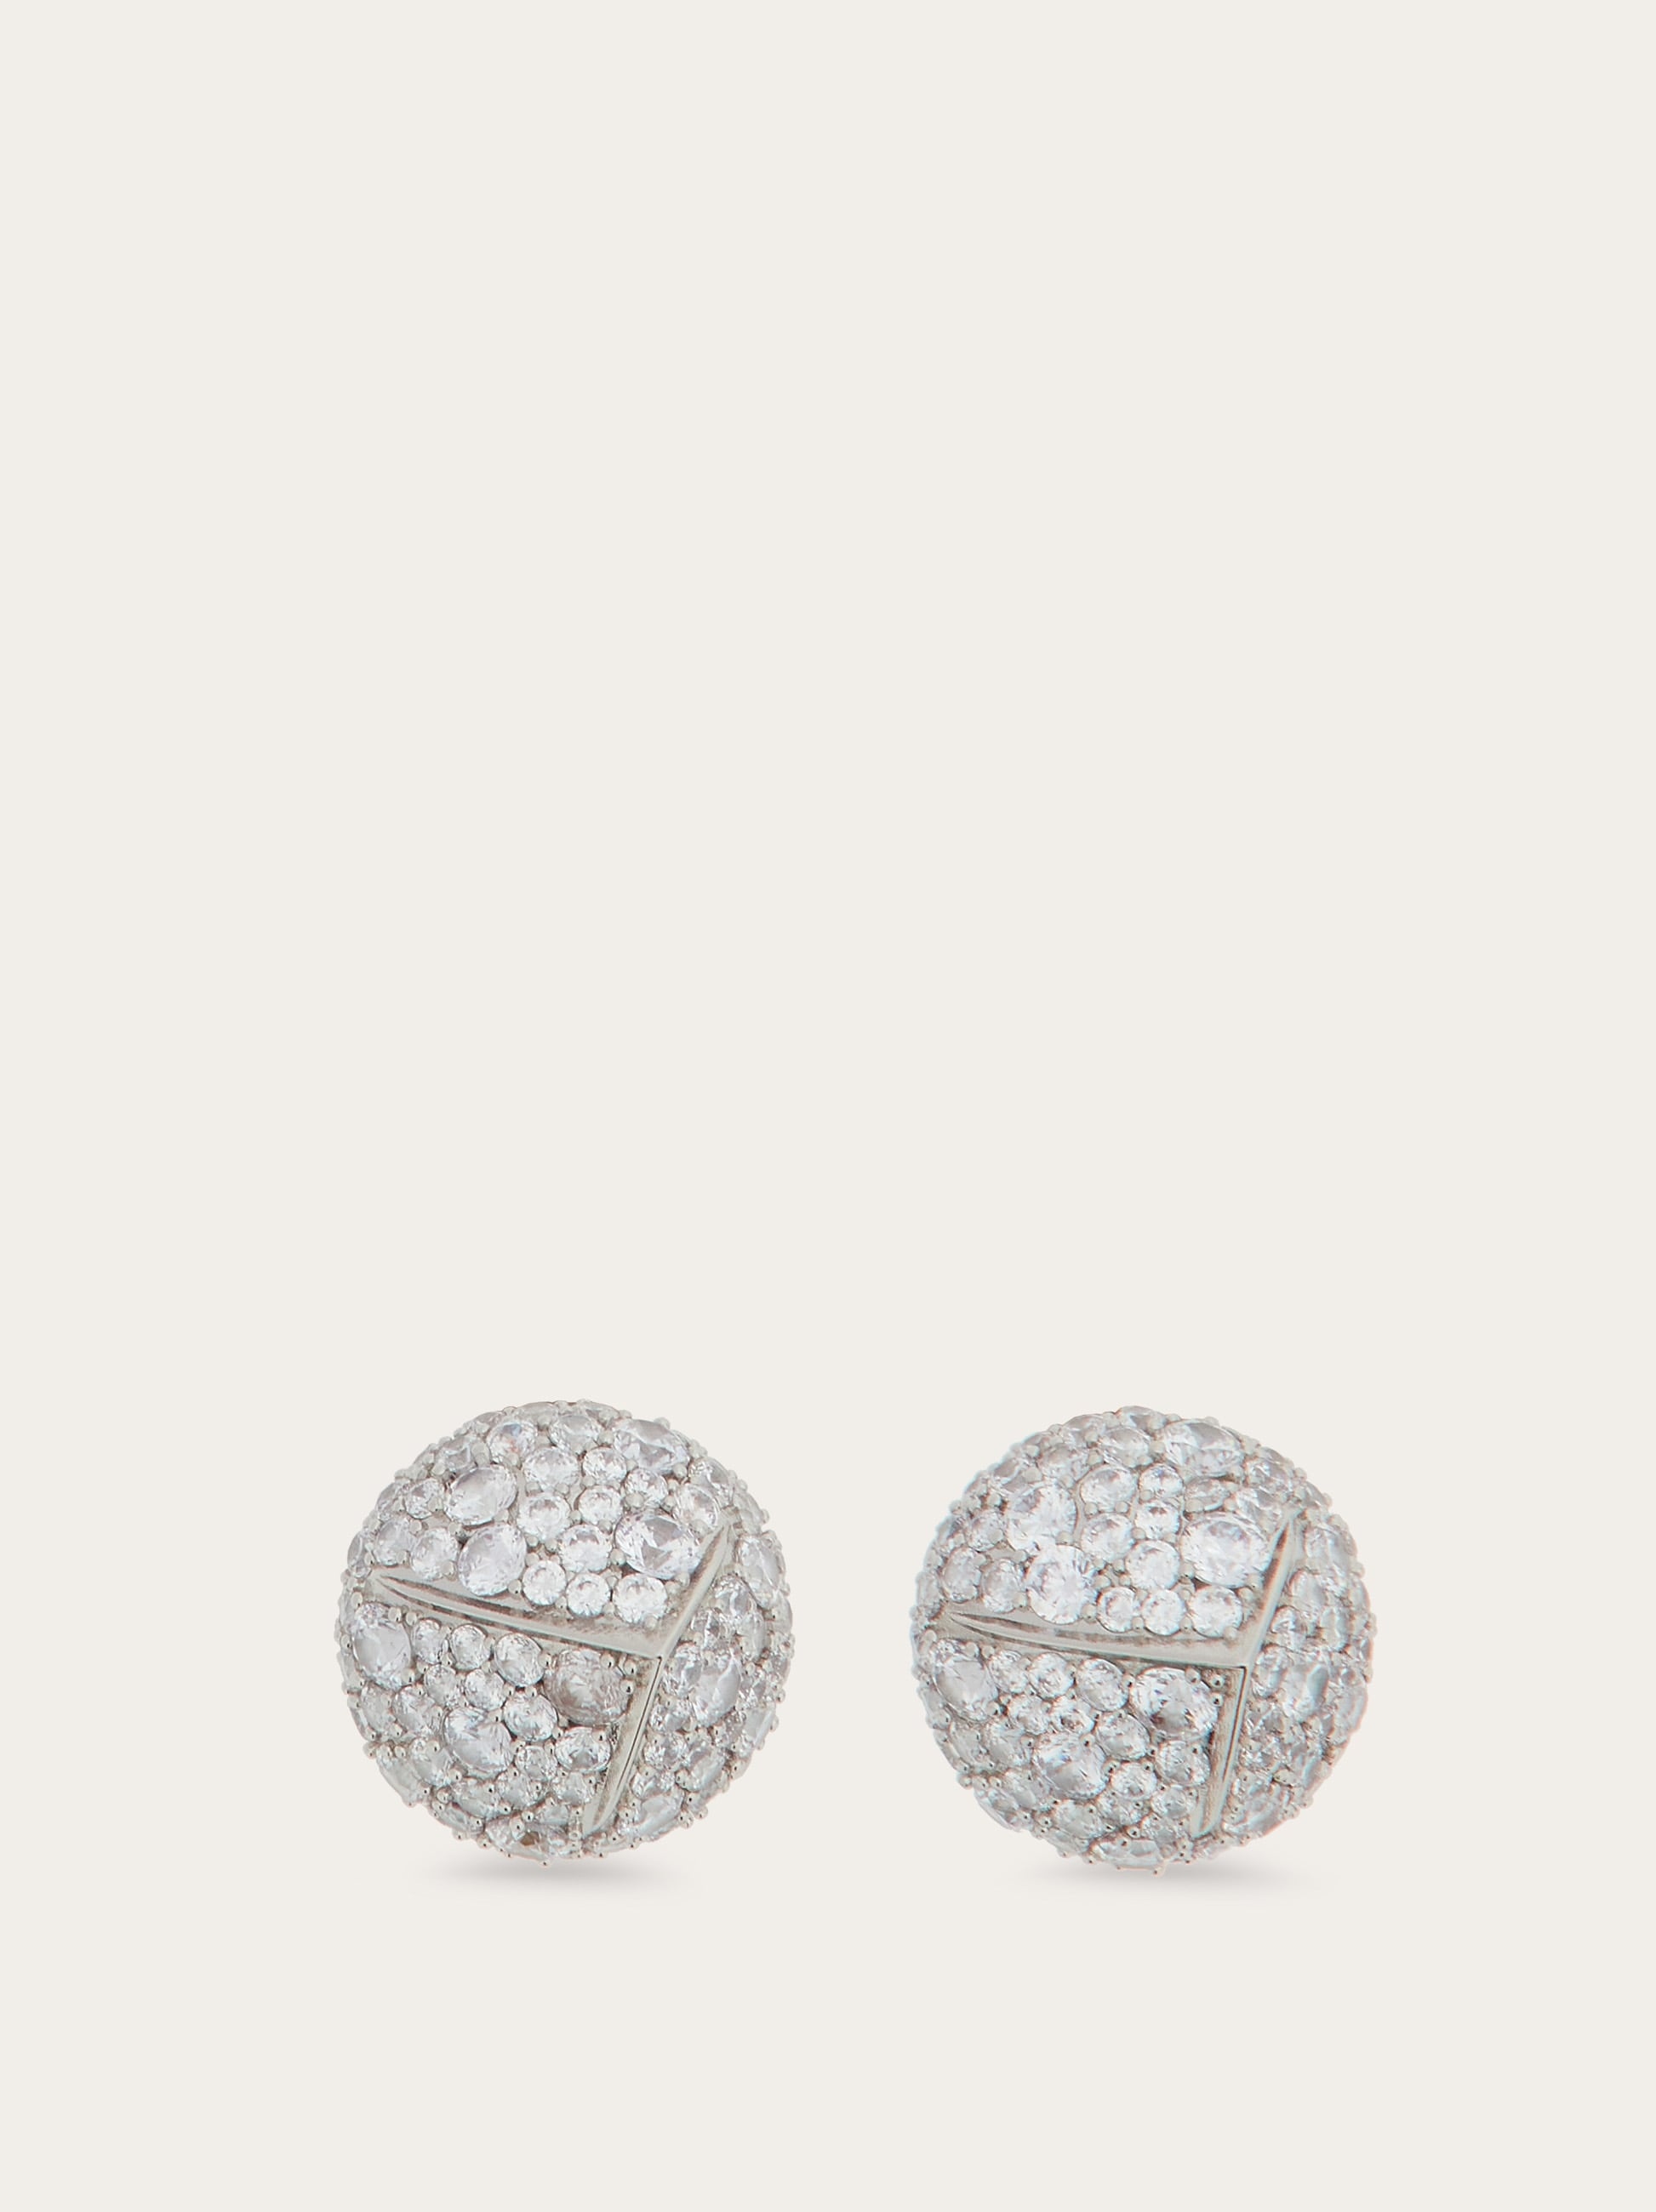 Pine cone earrings with rhinestones (L) - 1